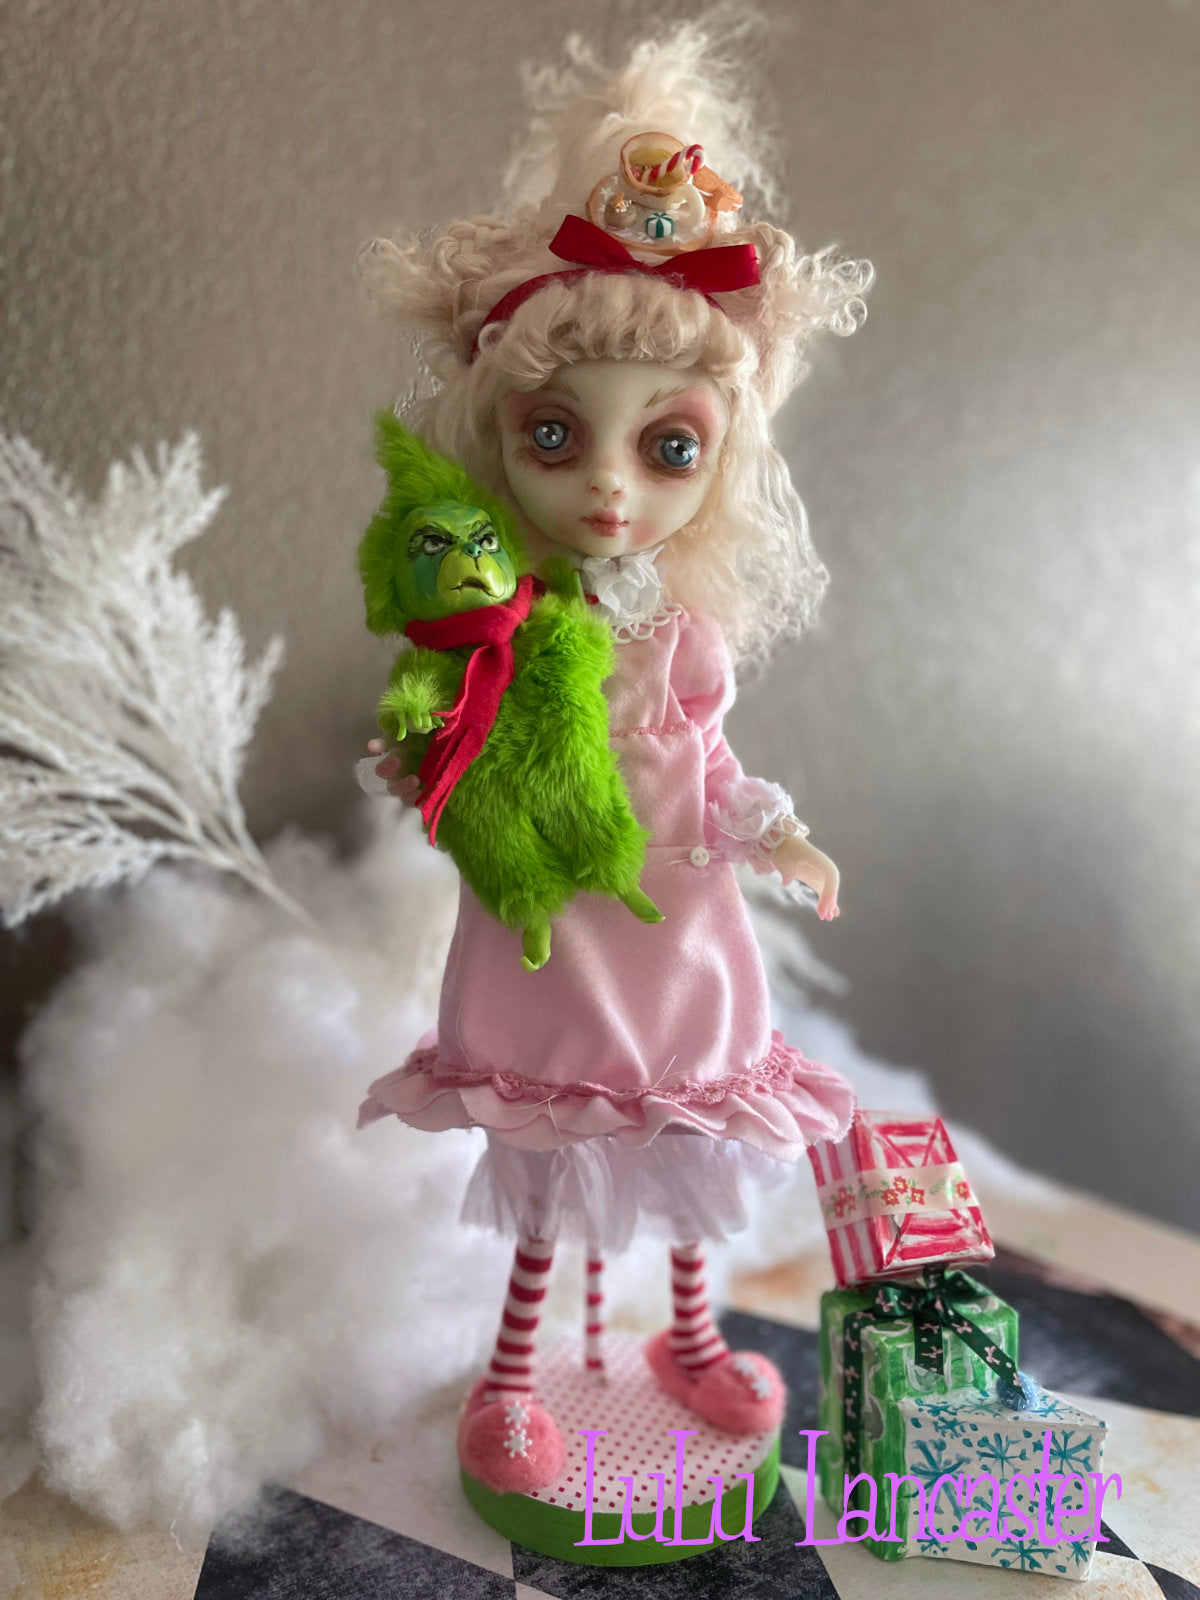 CindyLou and Baby Grinchy LuLu's Holiday Original LuLu Lancaster Art Doll